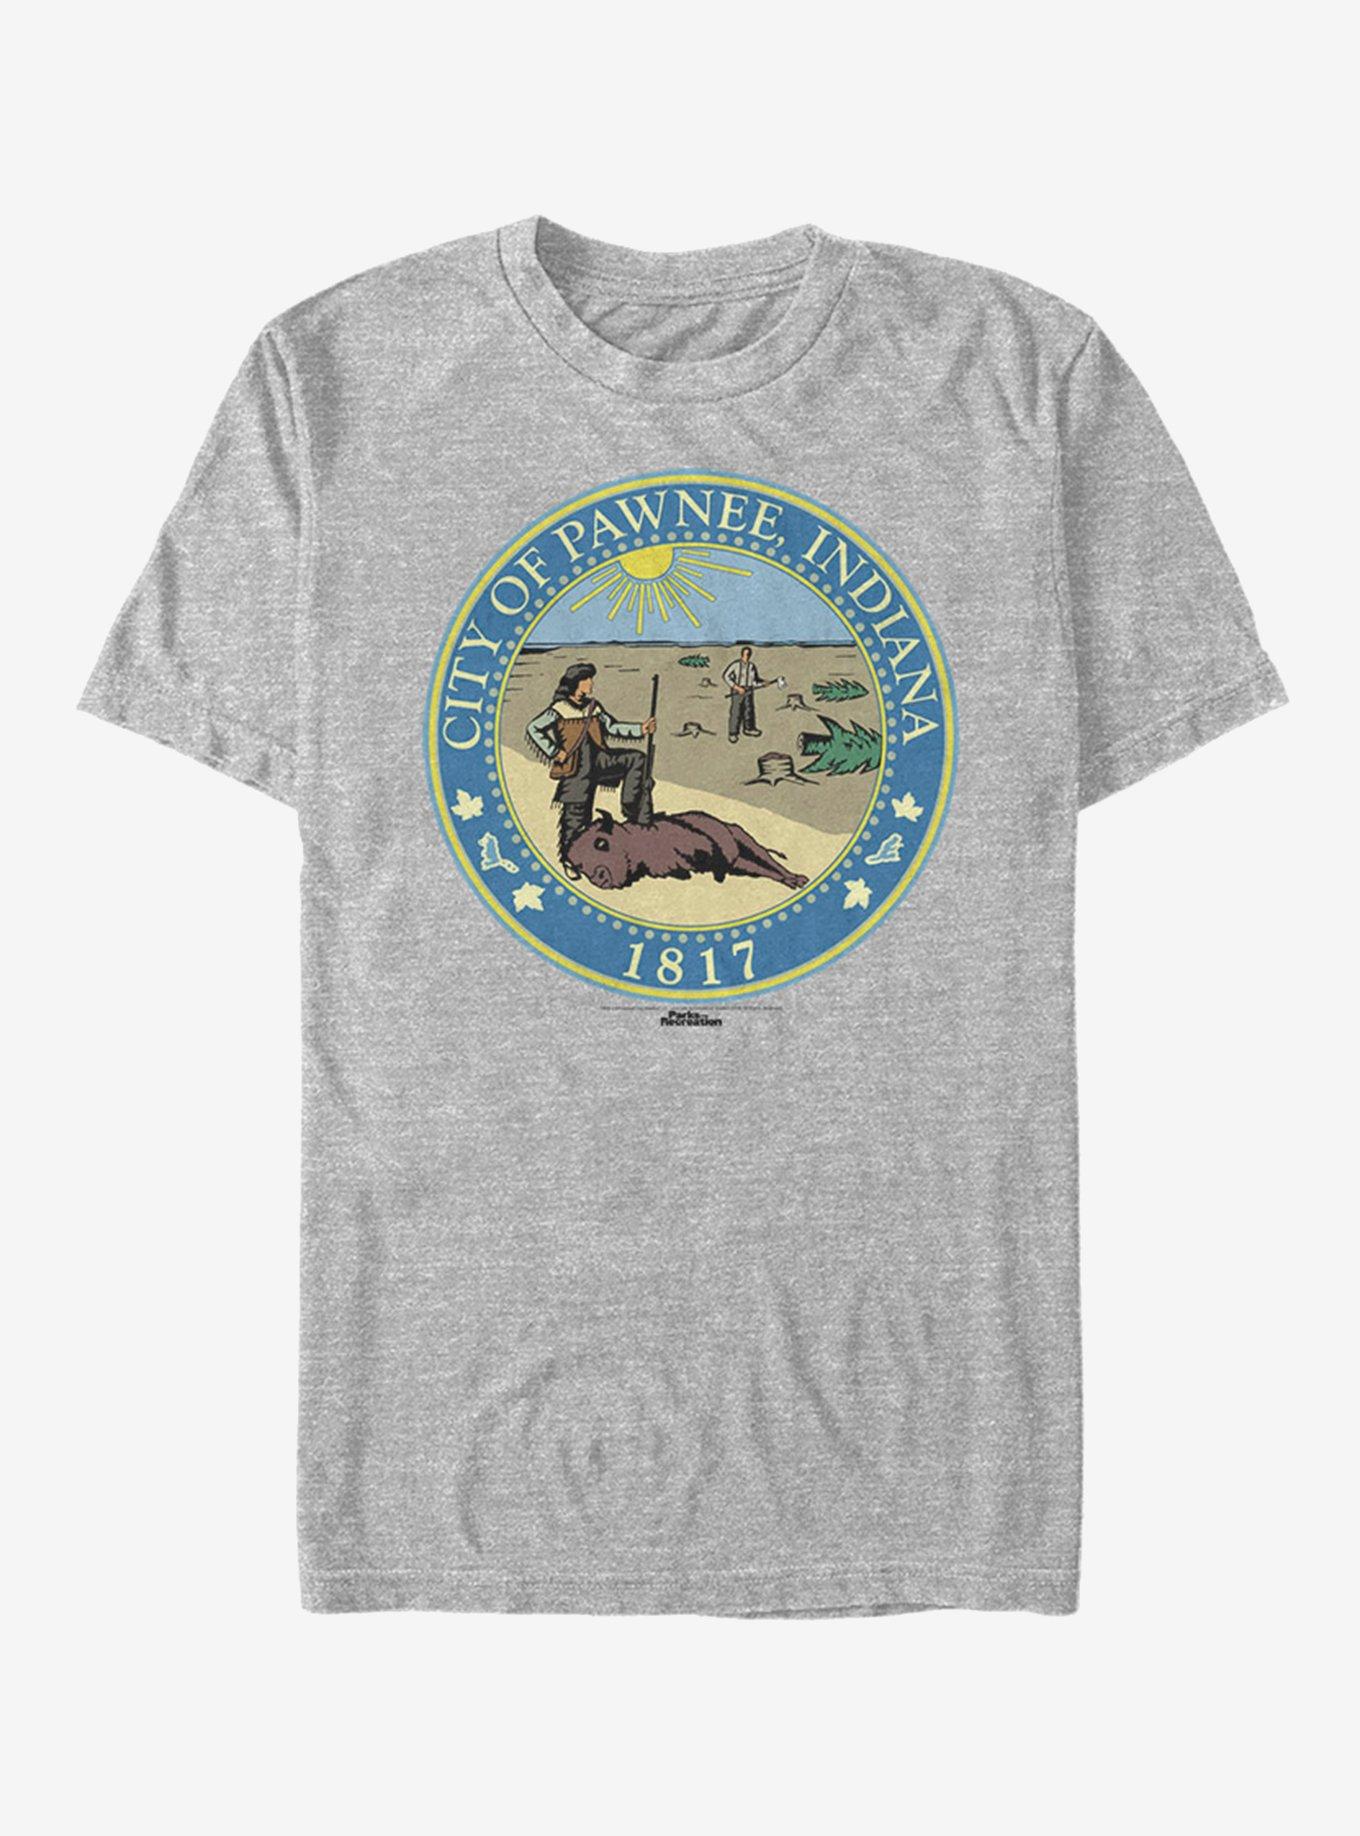 Parks & Recreation City of Pawnee T-Shirt